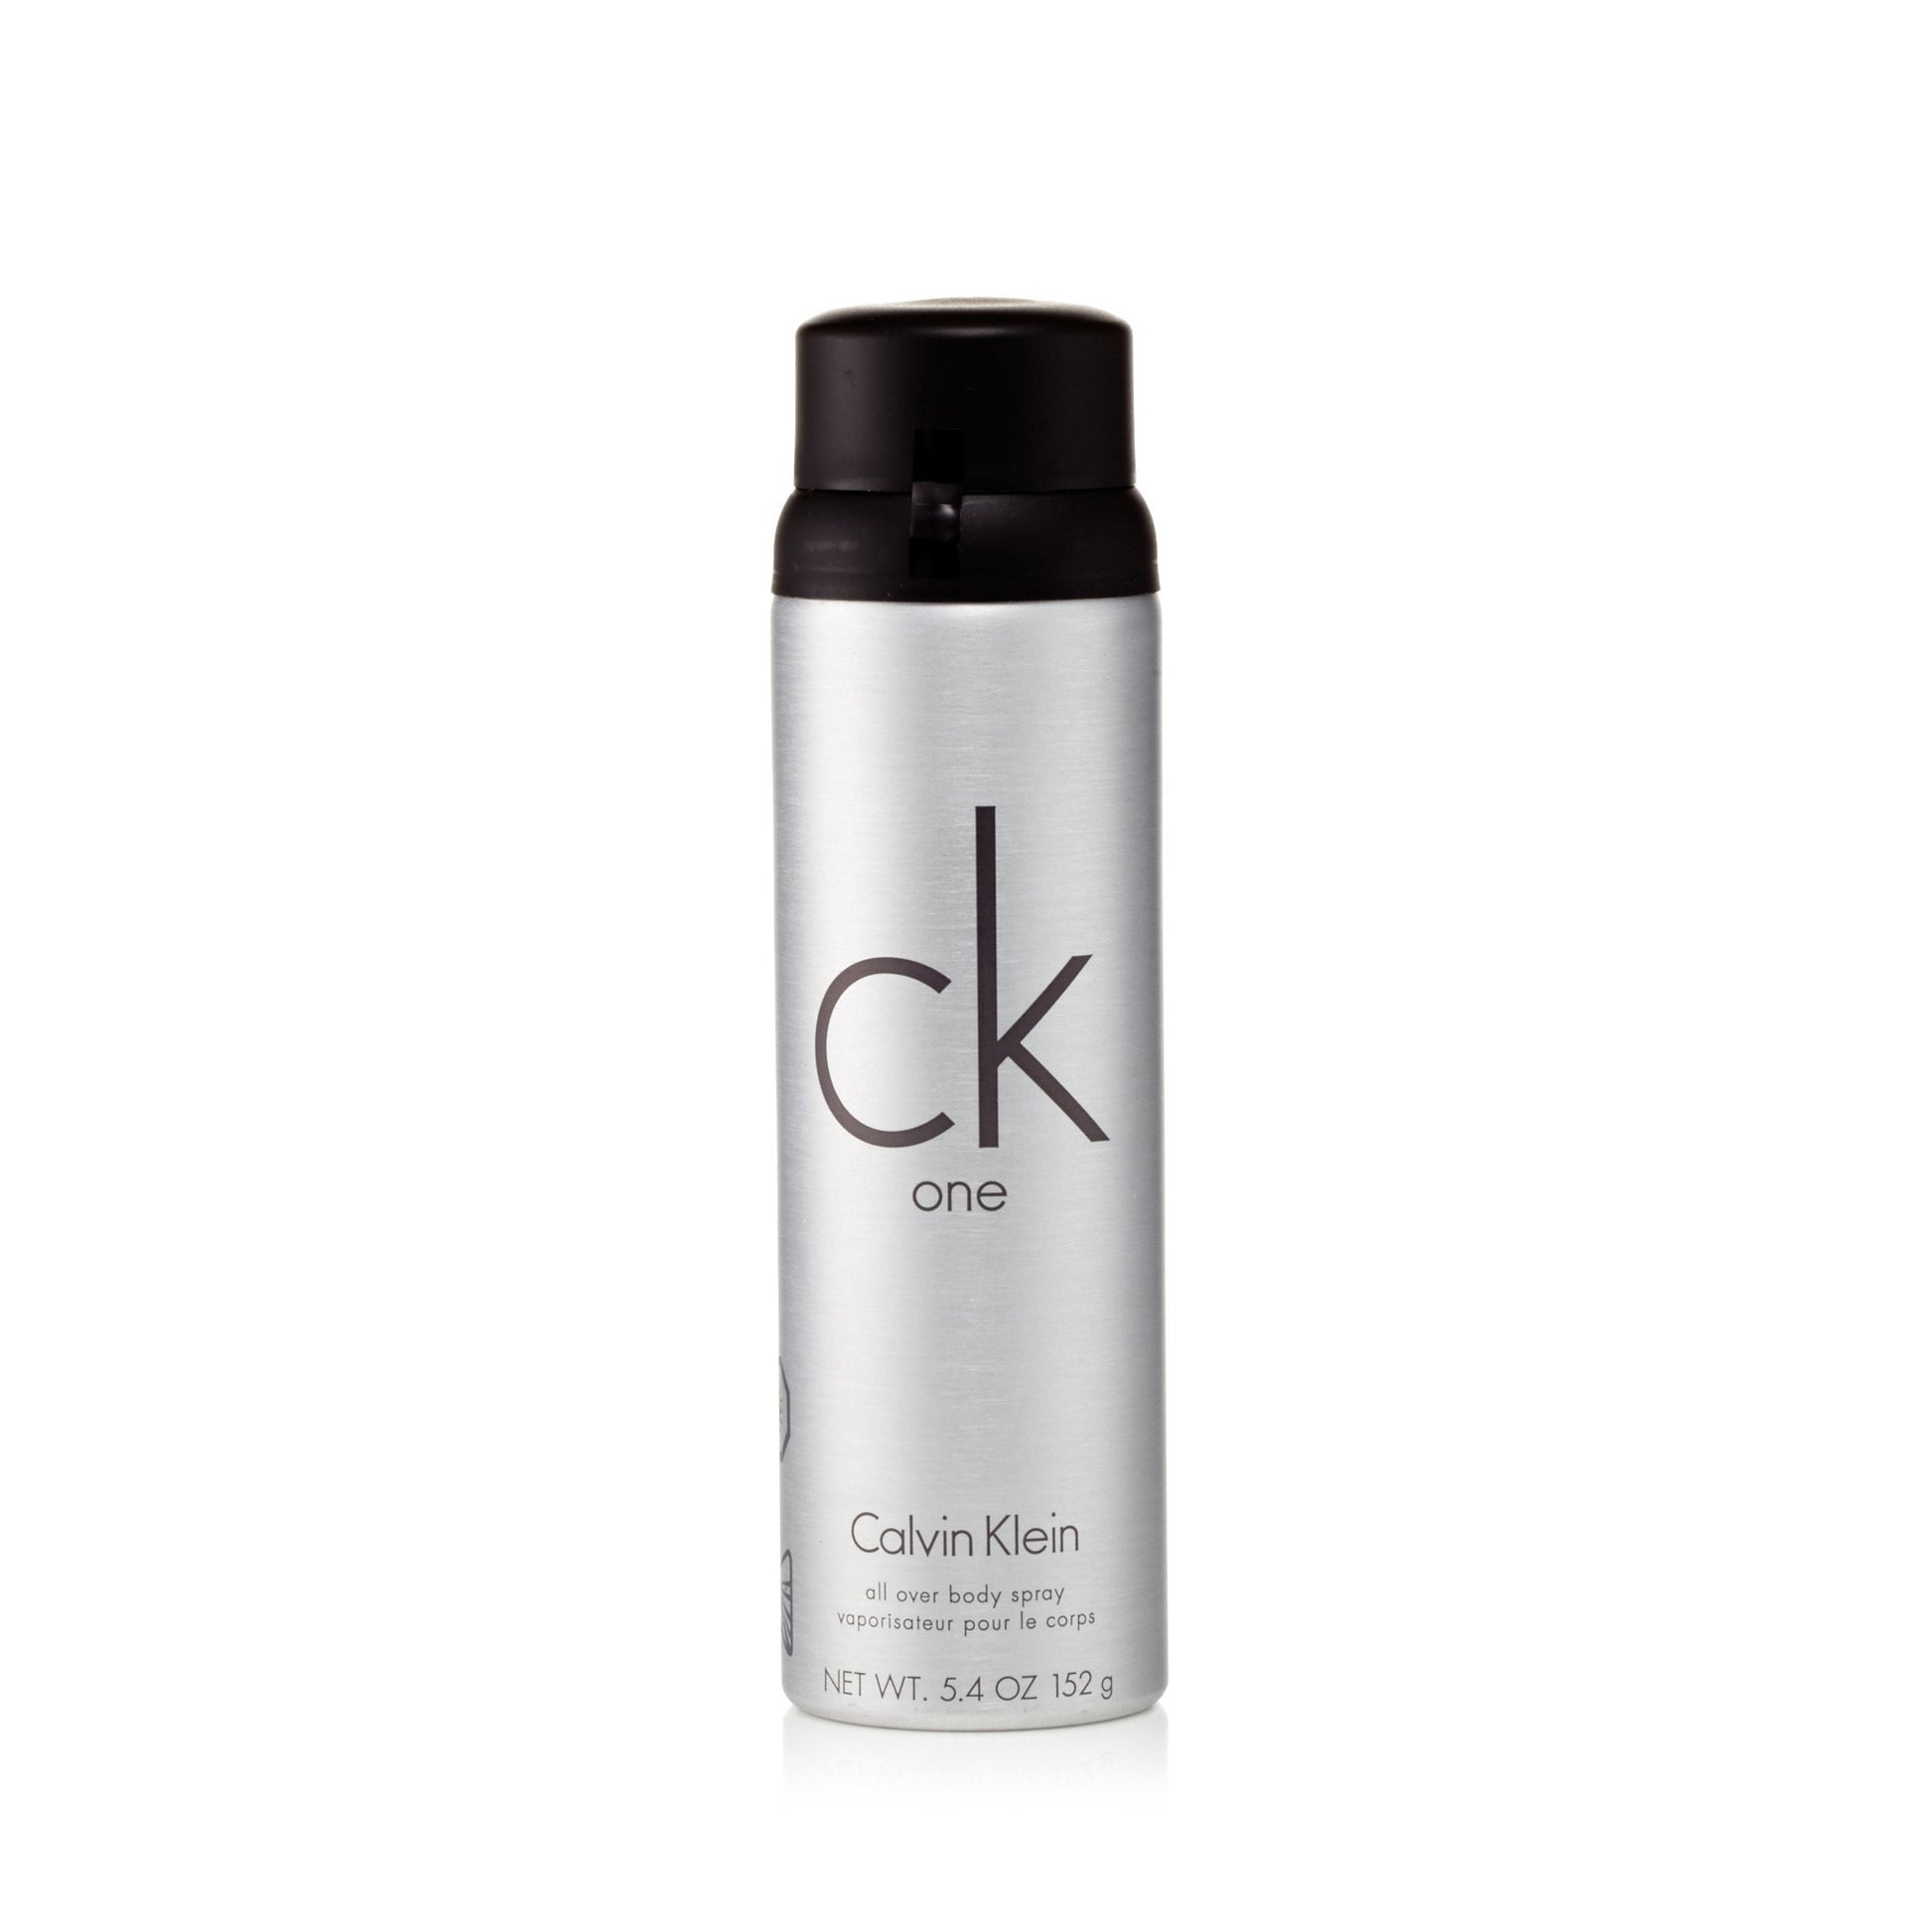 CK ONE Body Spray Unisex by Calvin Klein 5.4 oz. Click to open in modal